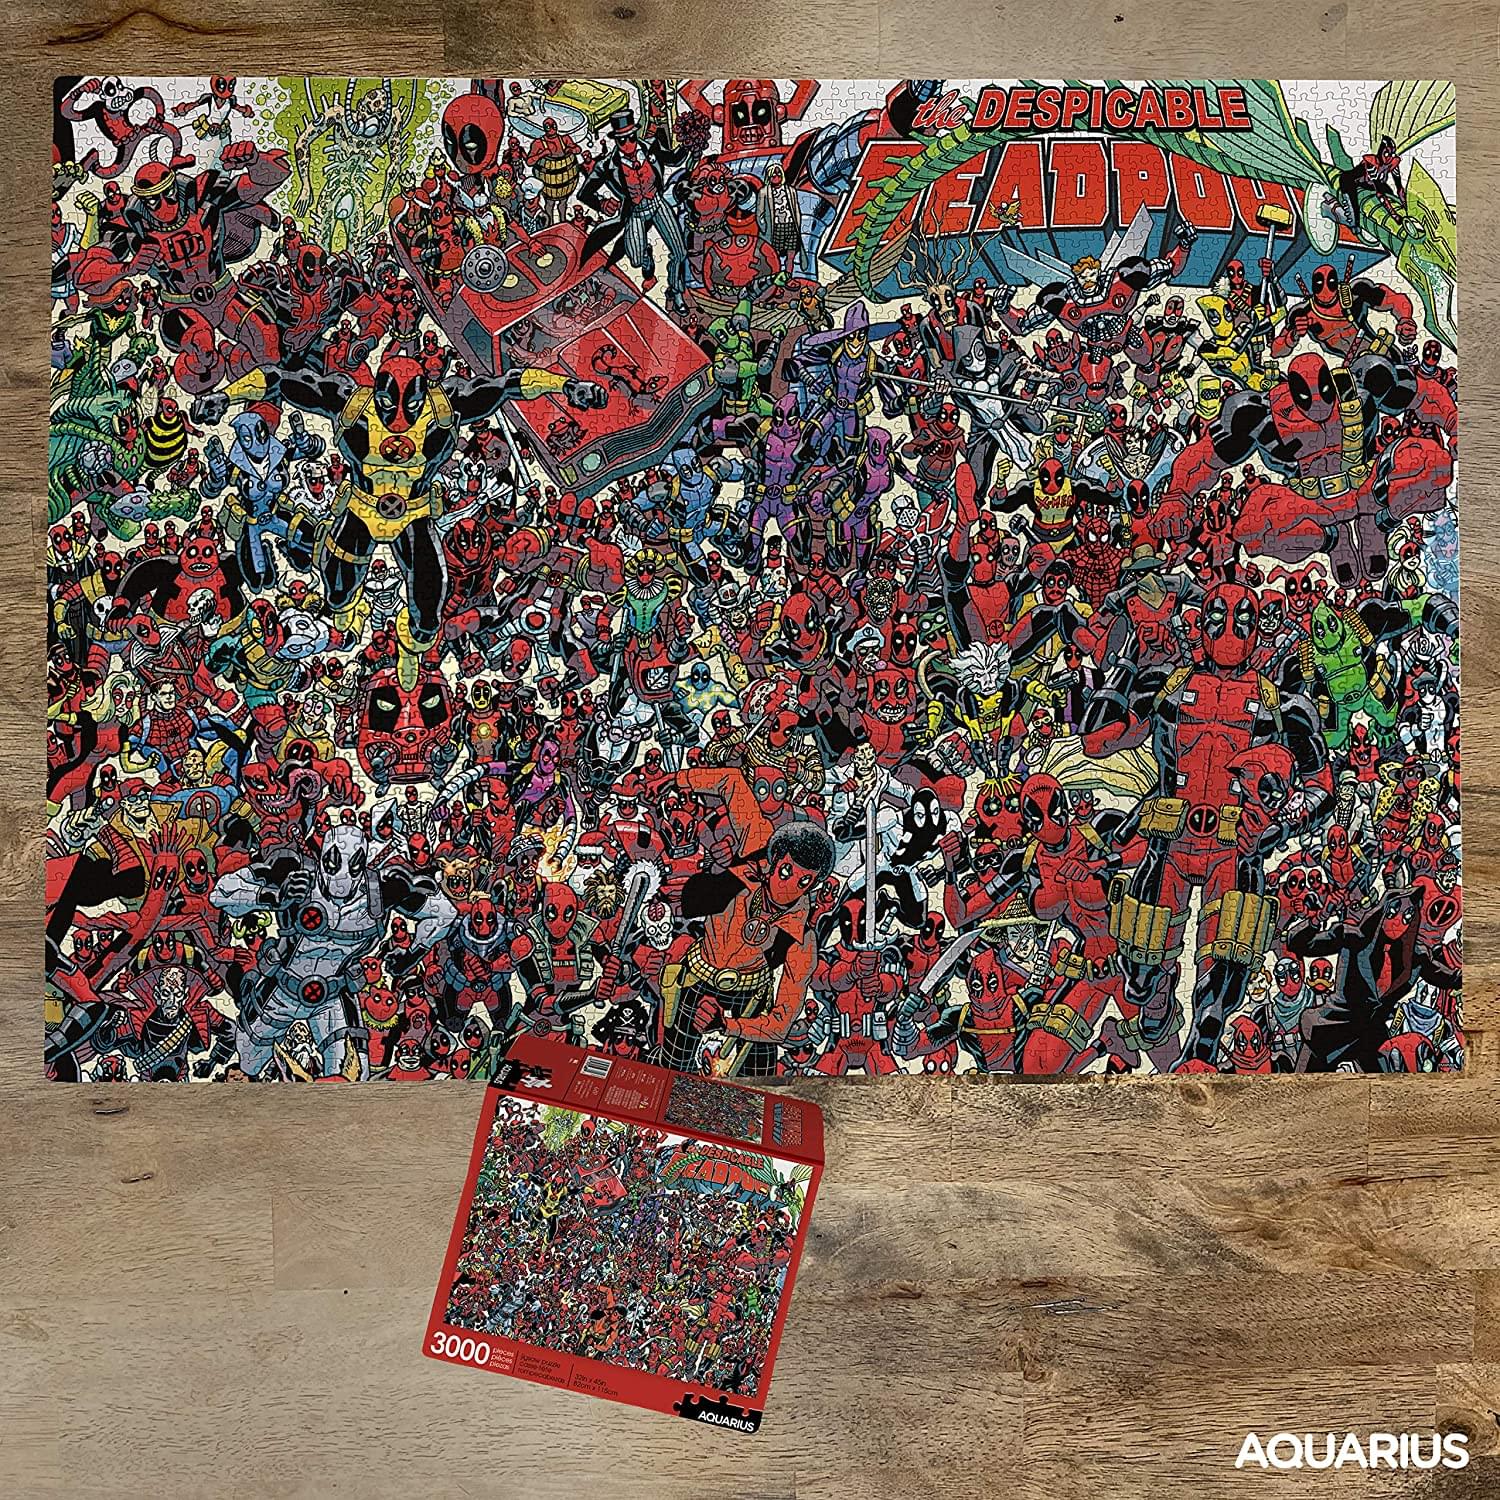 Marvel Despicable Deadpool 3000 Piece Jigsaw Puzzle